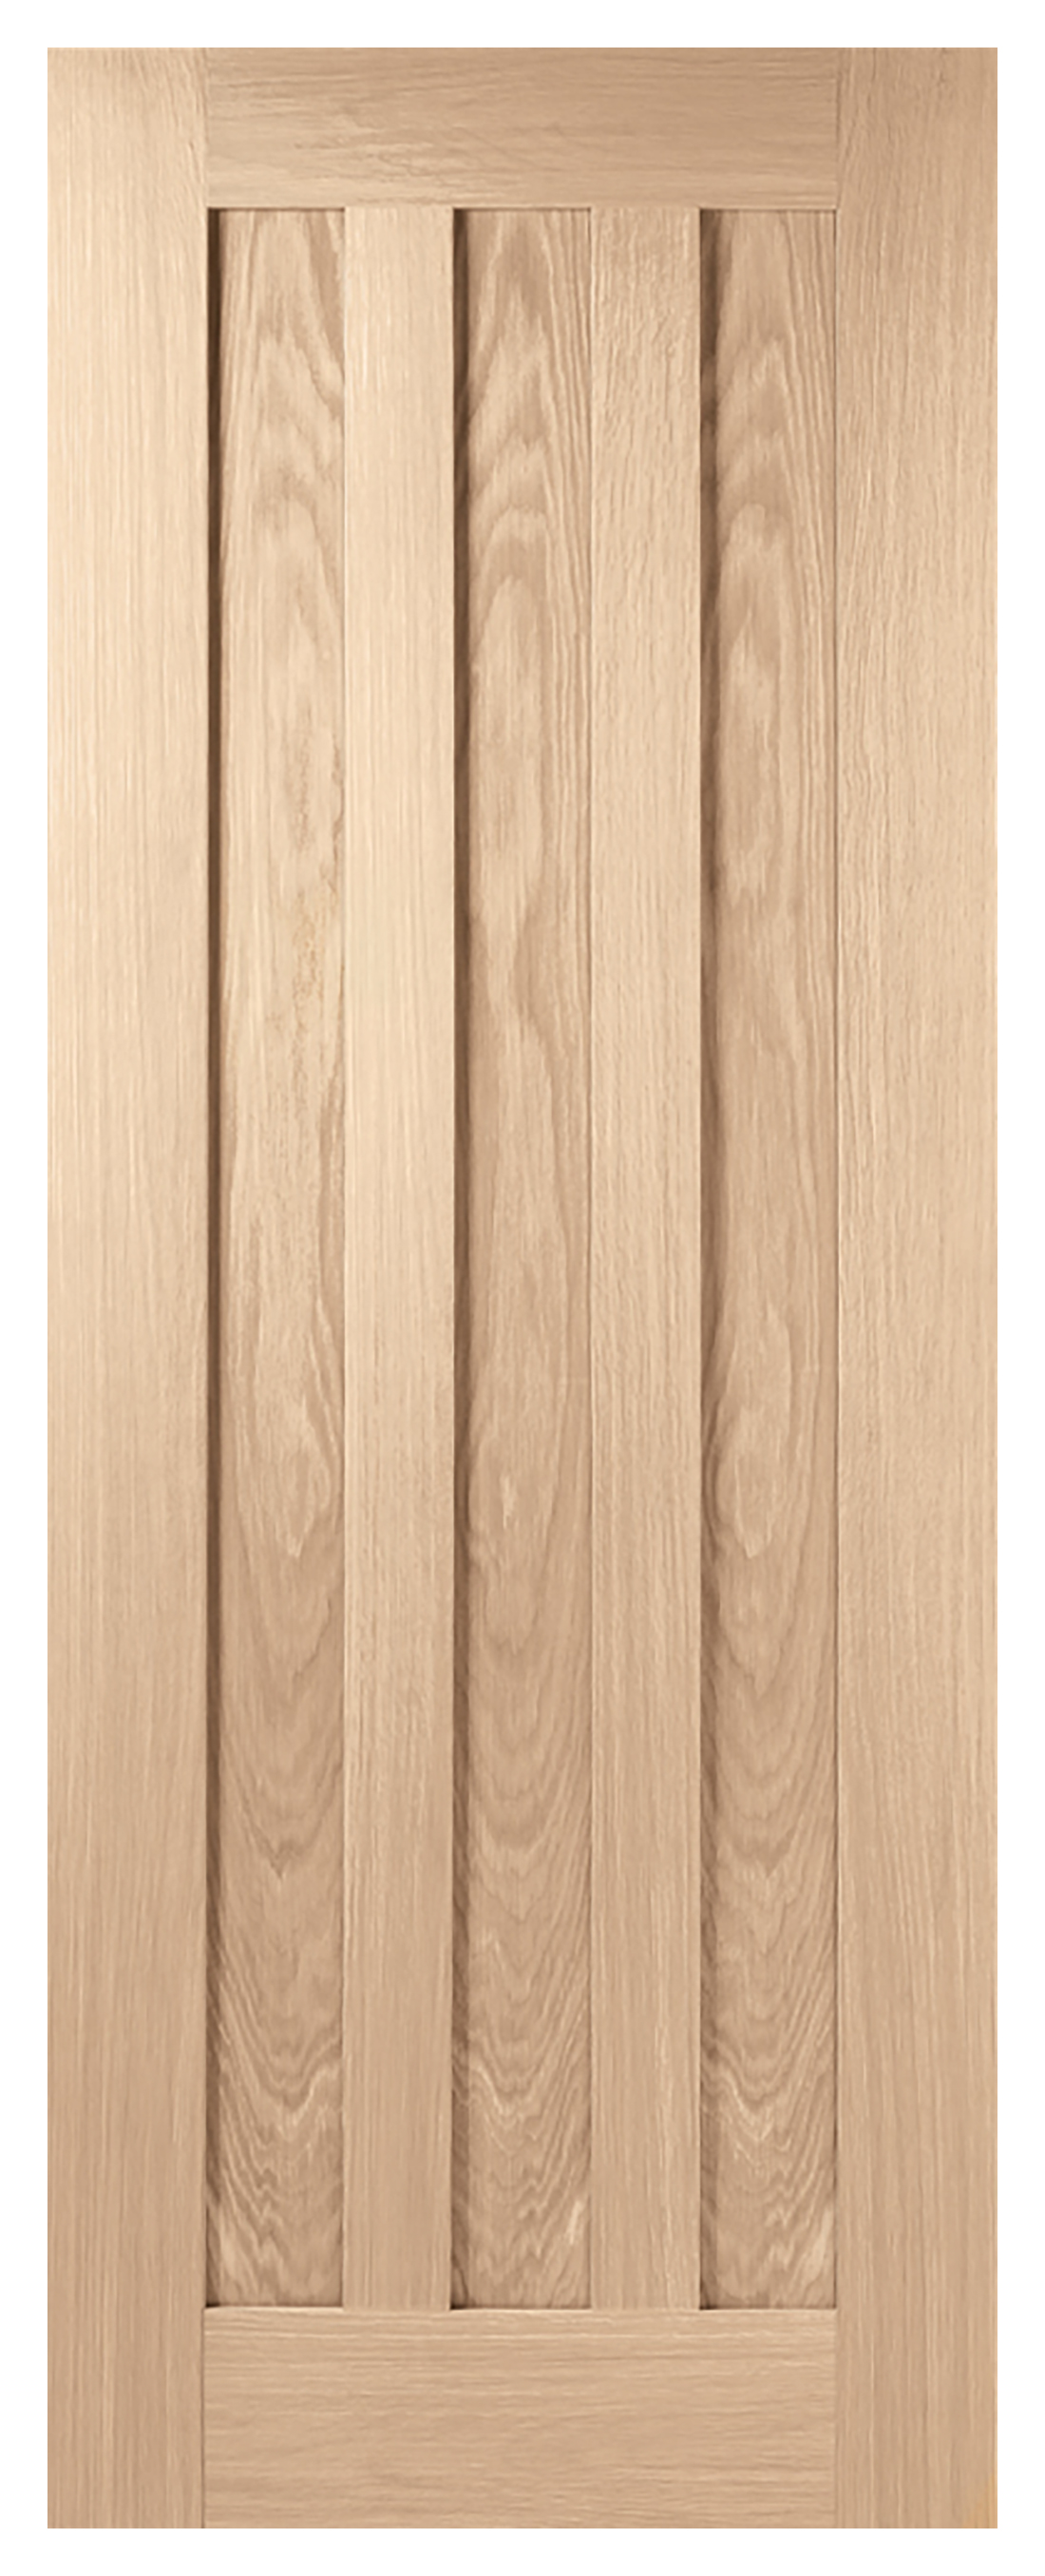 Image of LPD Internal Idaho 3 Panel Unfinished Oak Solid core Door - 838 x 1981mm